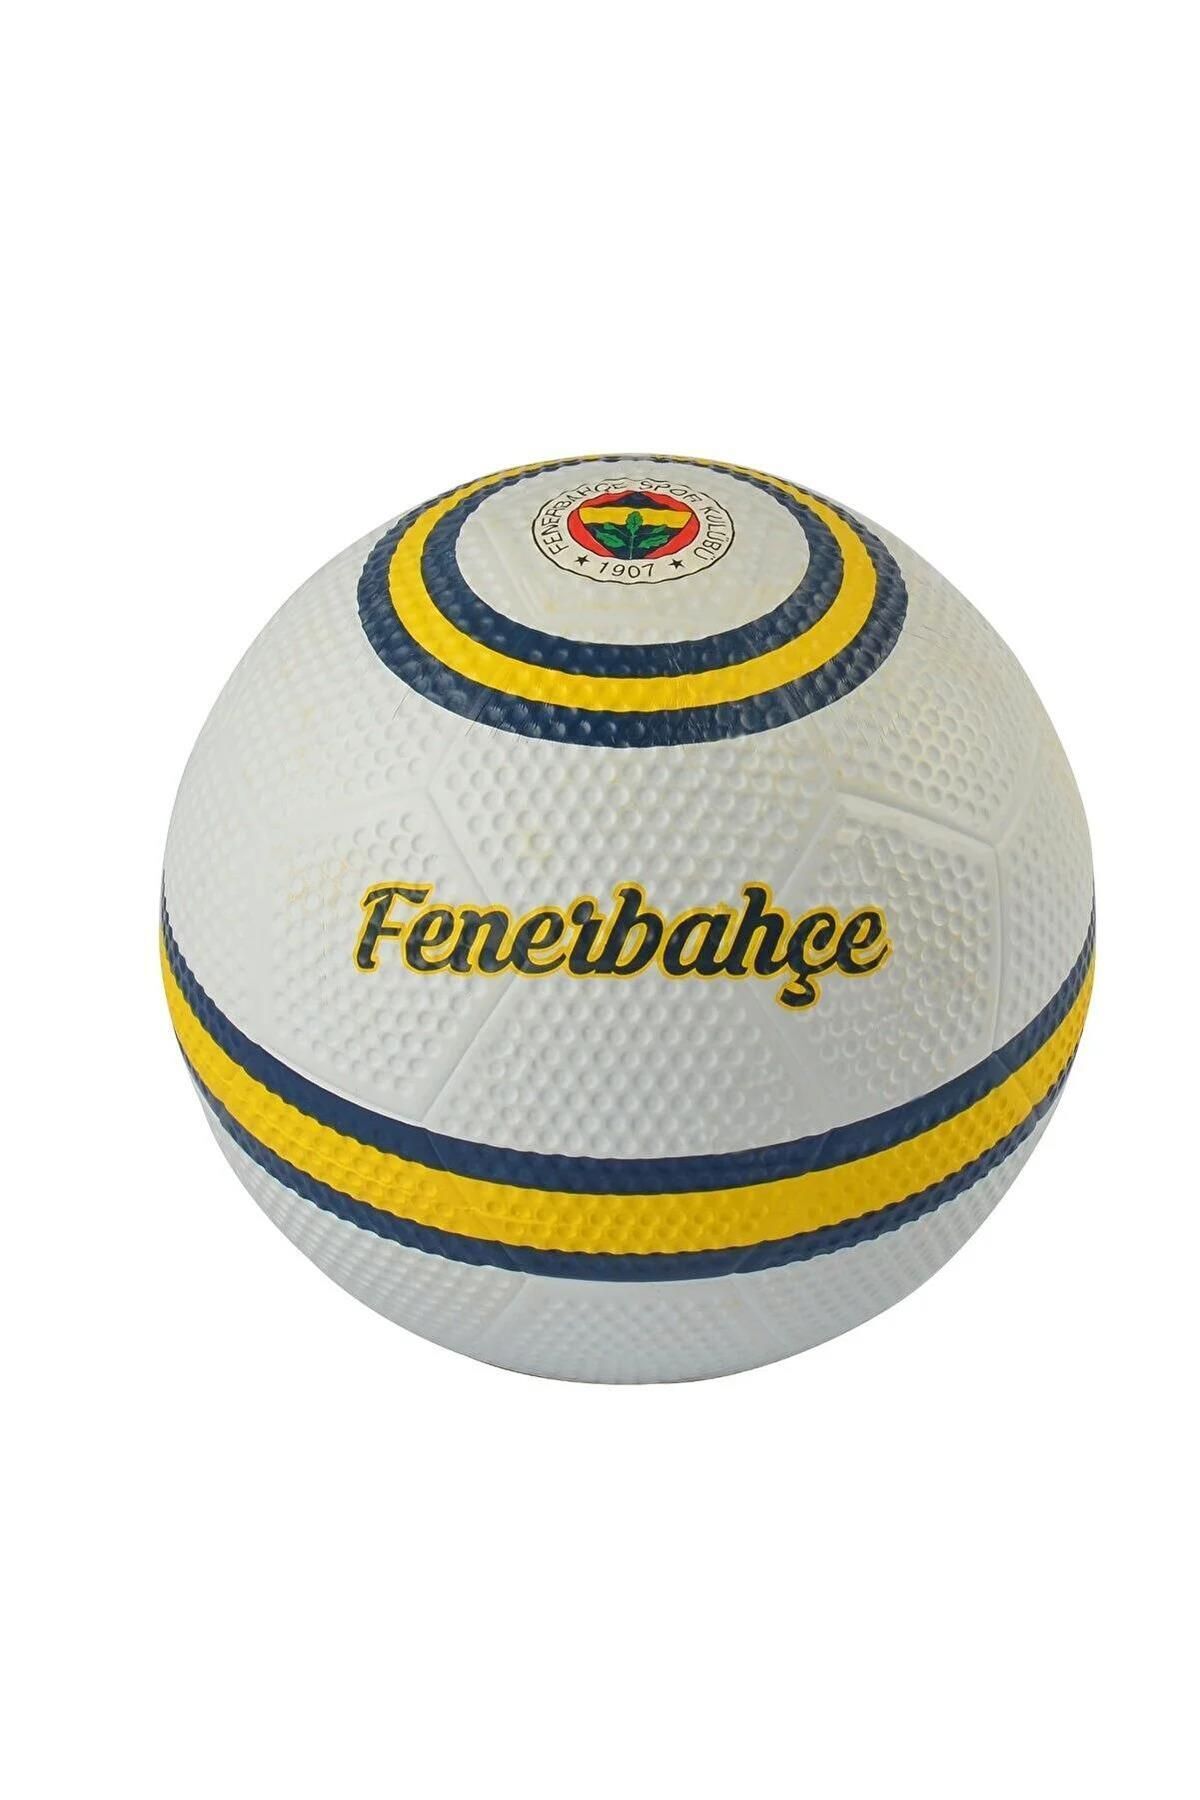 Timon Fenerbahçe Futbol Topu Skyline-01 No:5 Mavi Yeni Sezon